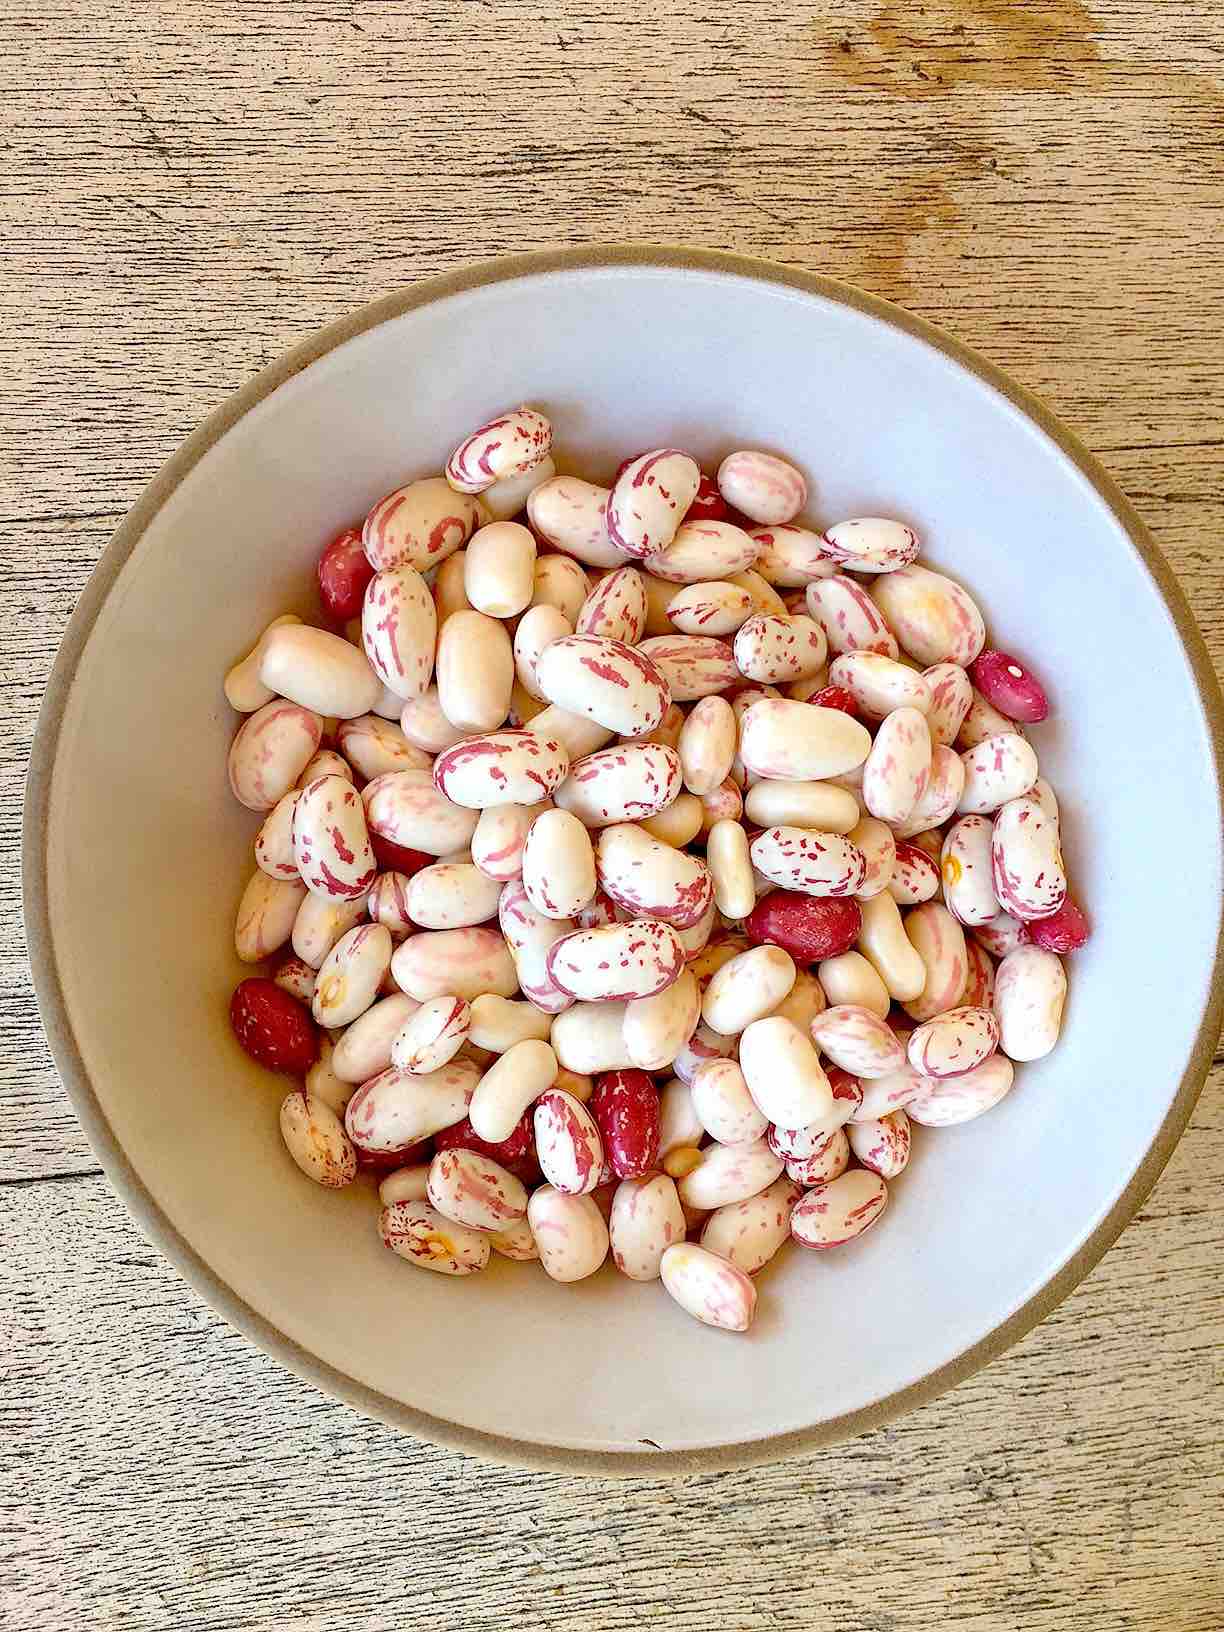 Cranberry beans